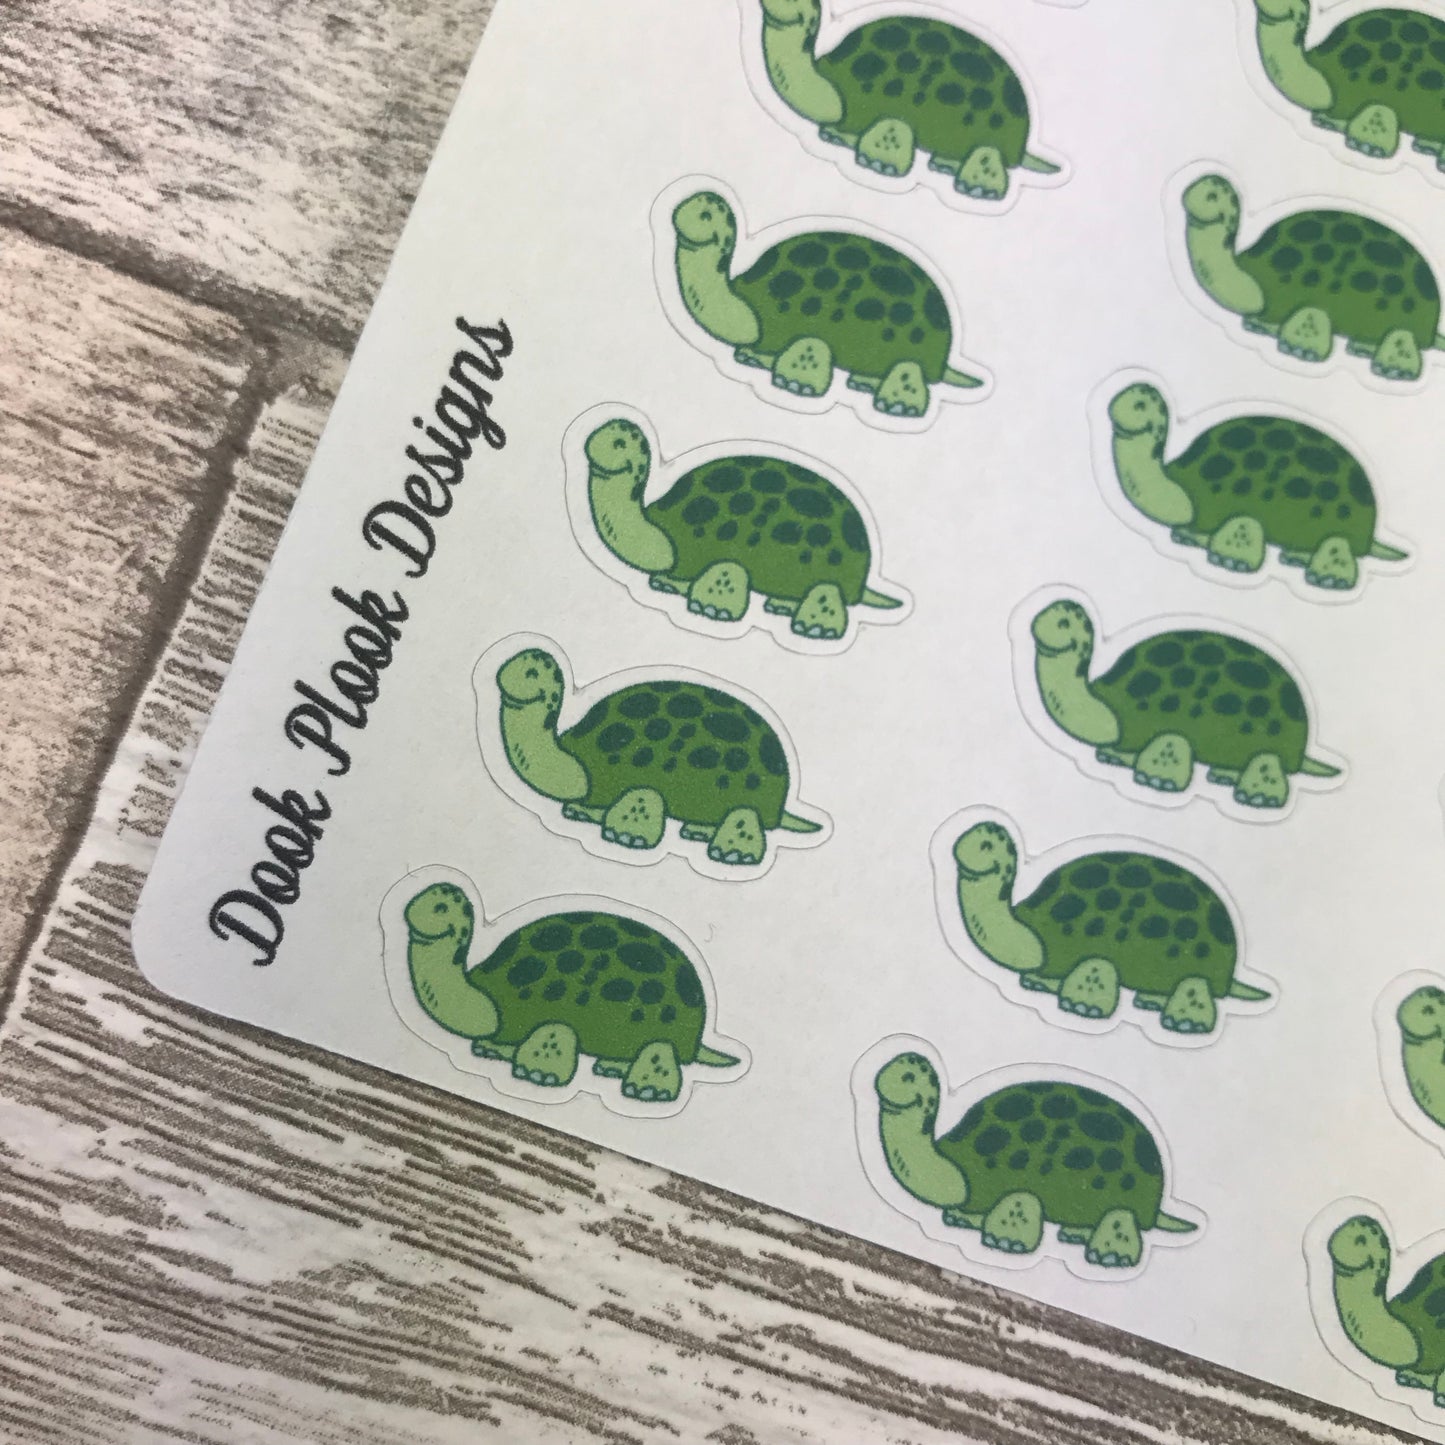 Turtle / tortoise stickers (DPD379)